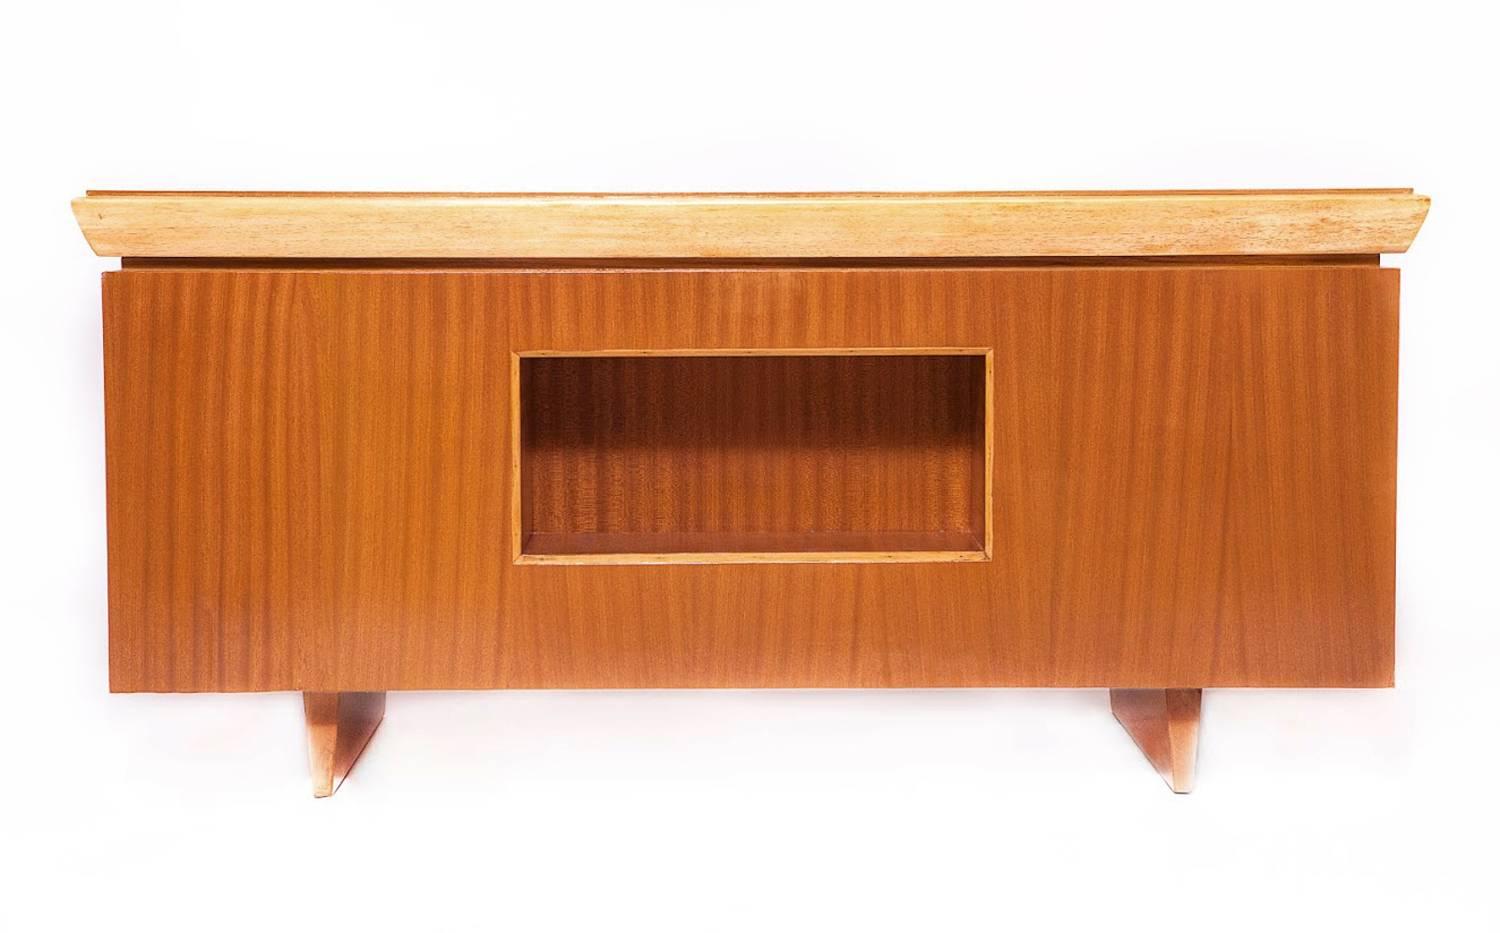 Rare mahogany executive kneehole desk by Paul Laszlo for Brown Saltman.
 